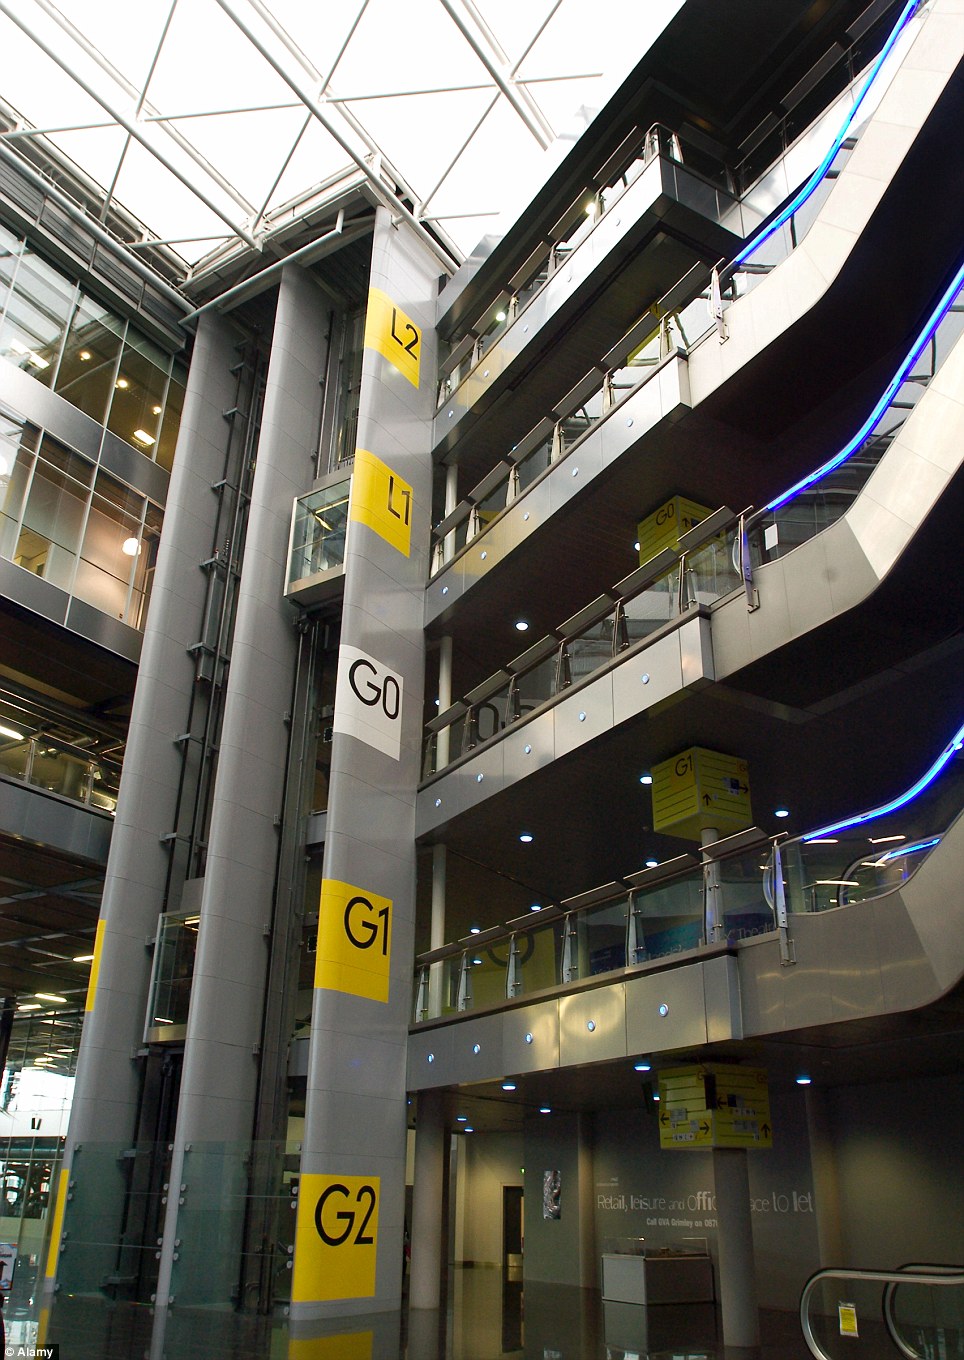 An internal view of the futuristic Millennium Point car park in Birmingham